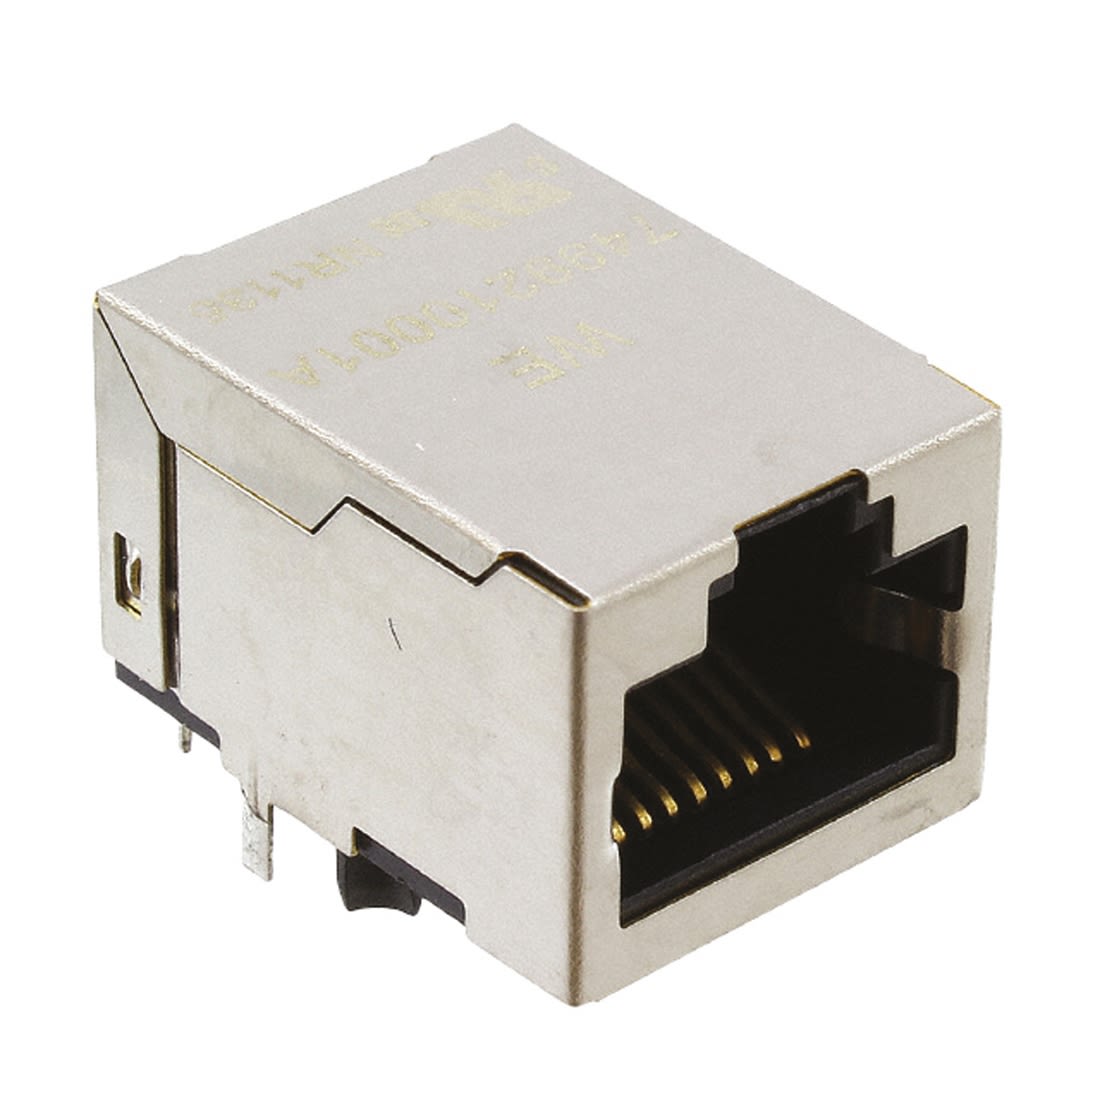 Through Hole Lan Ethernet Transformer, 16 x 13.74 x 21.84mm